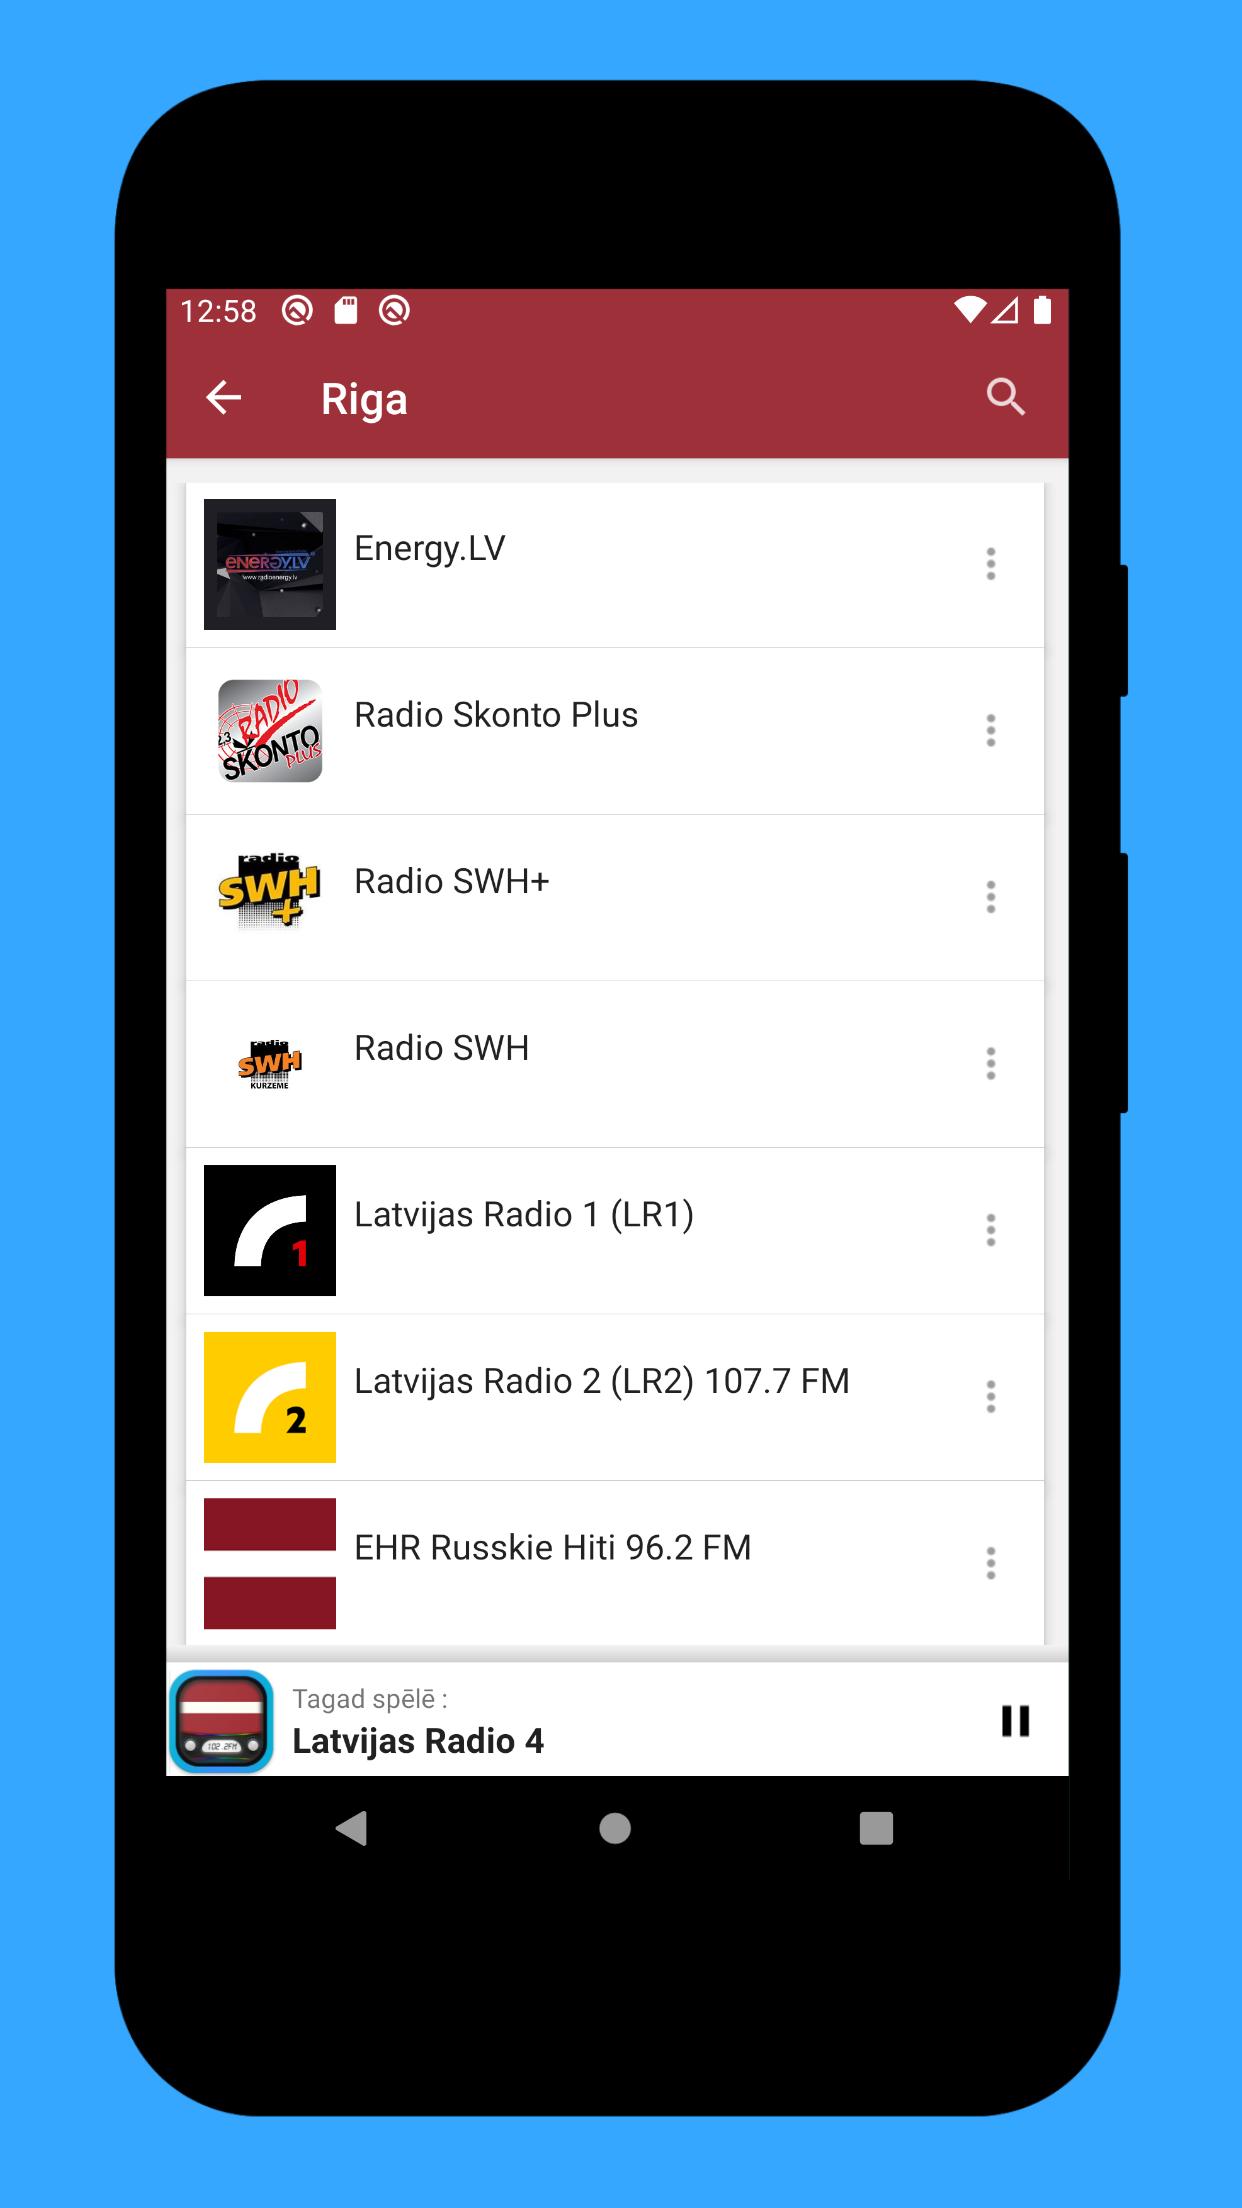 Radio Latvia: Radio Latvia FM - Stations online for Android - APK Download